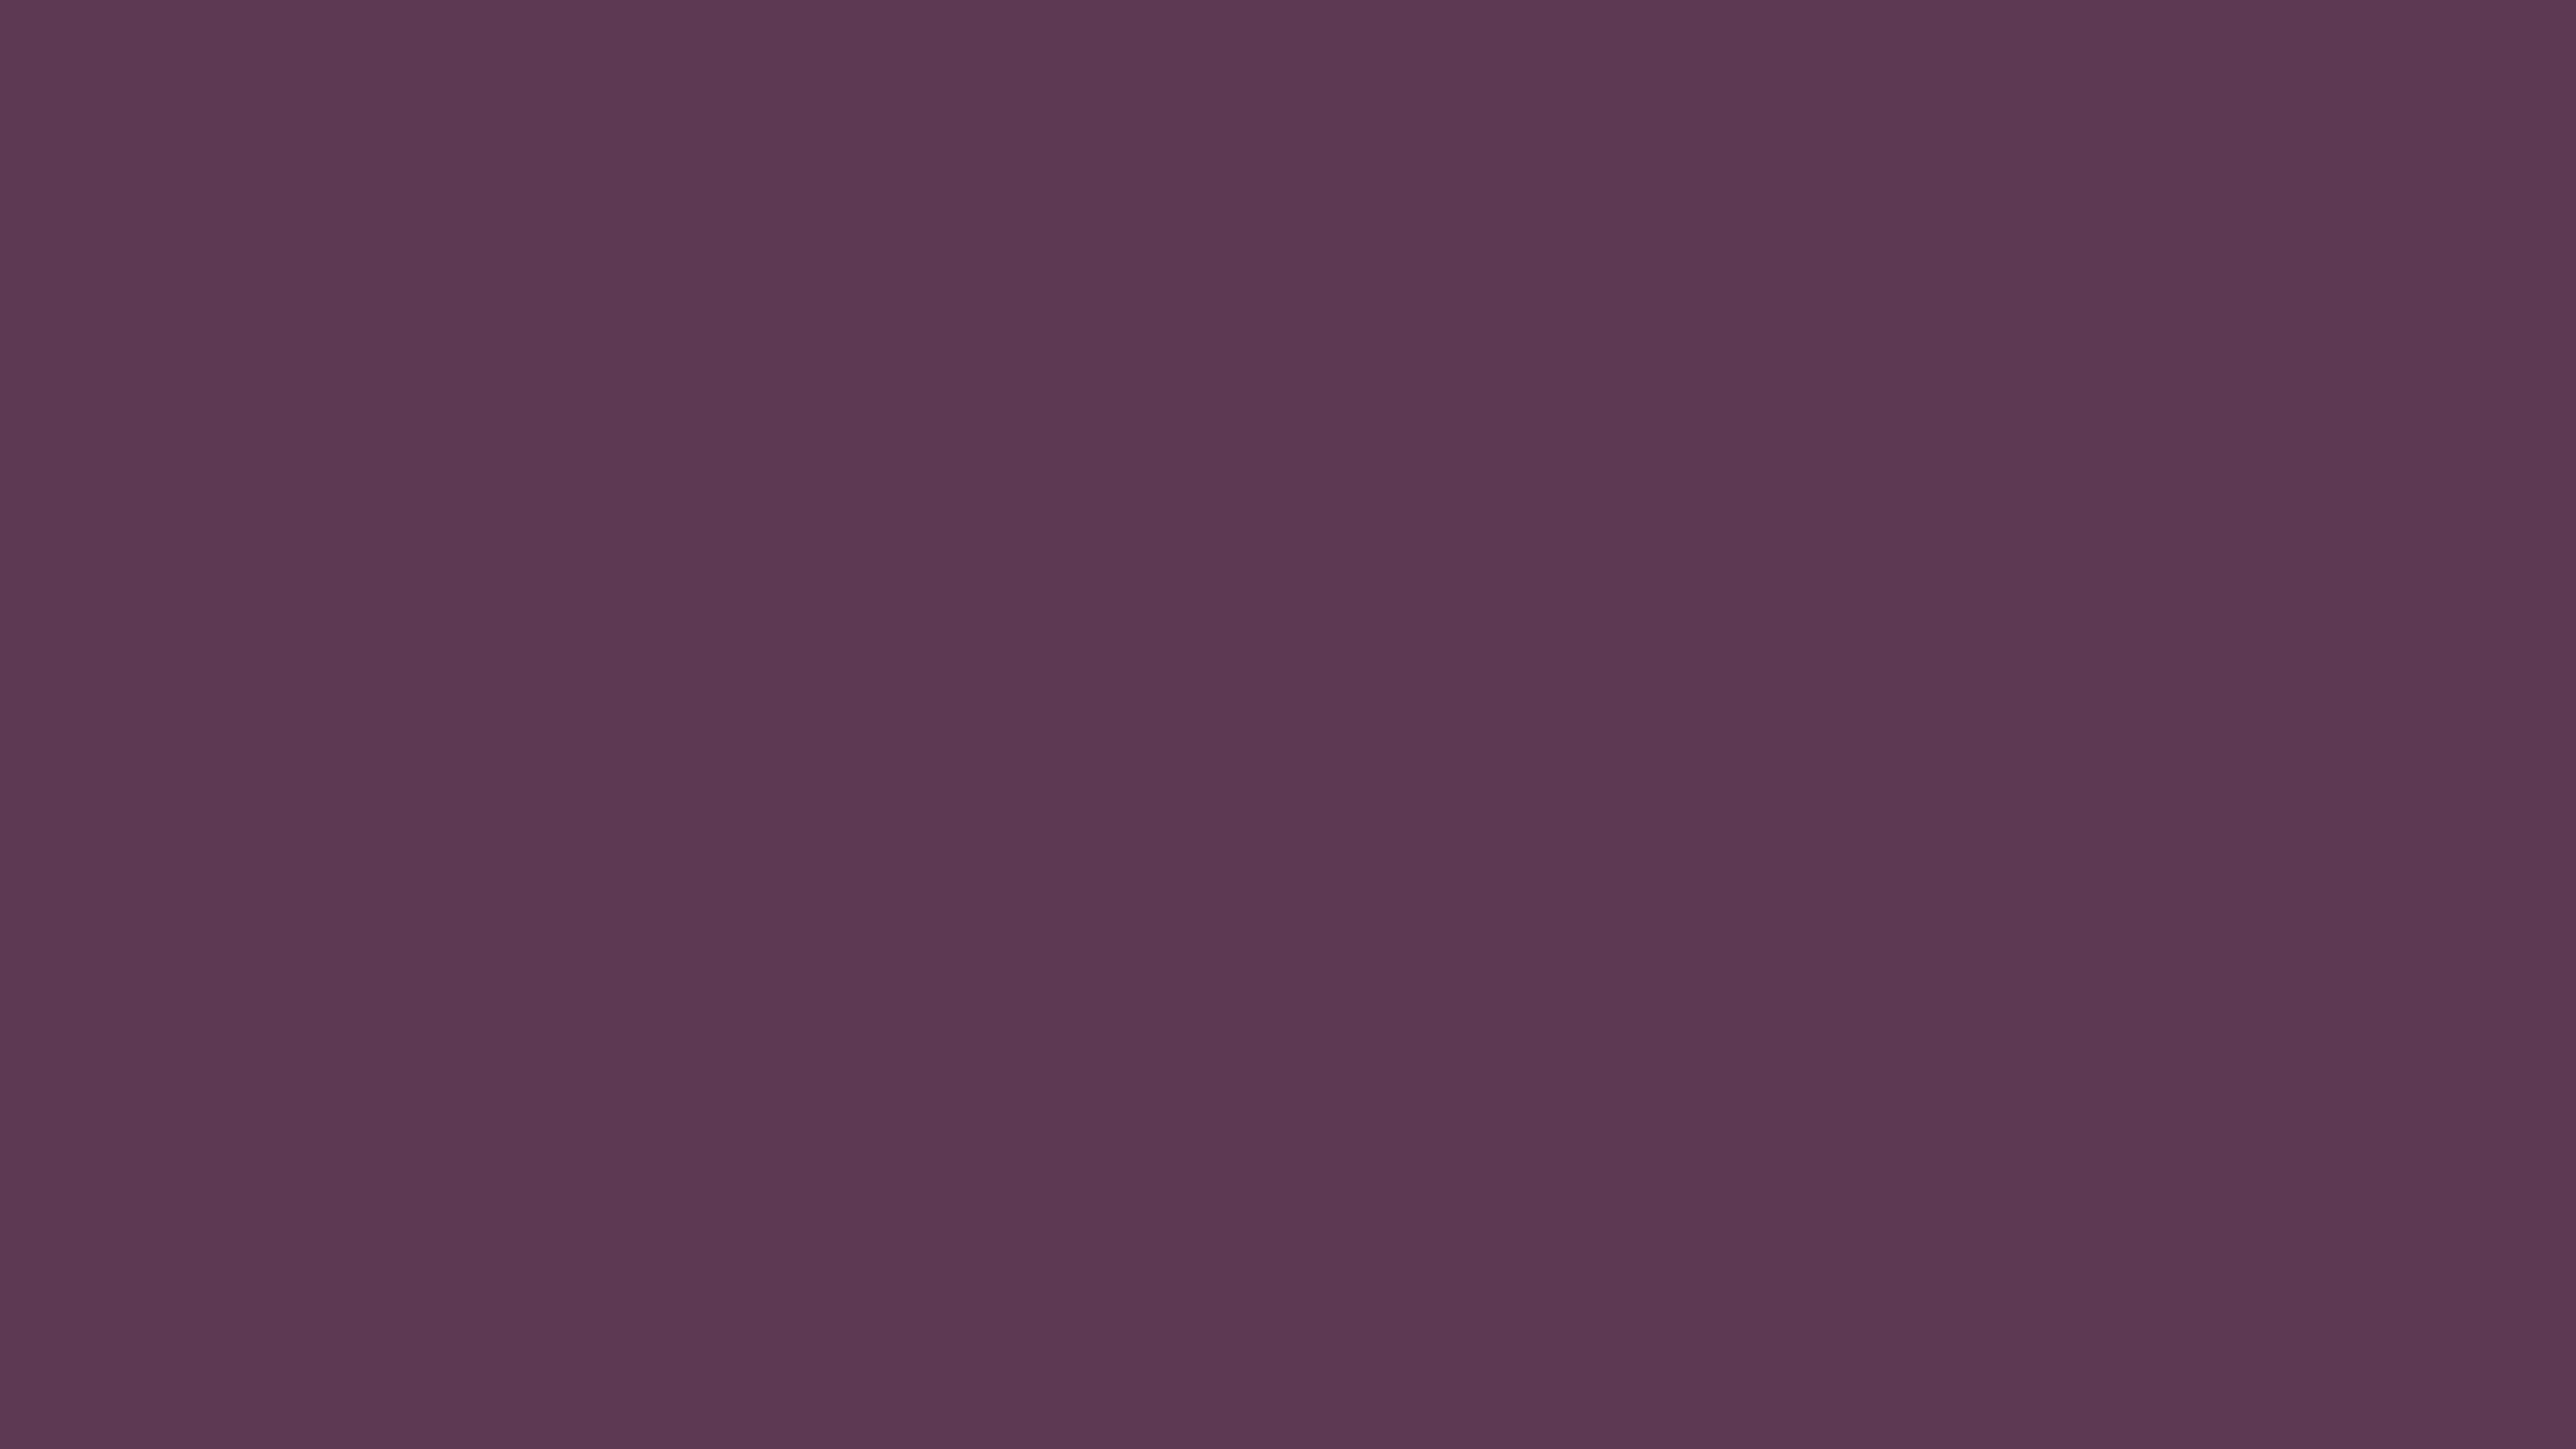 3840x2160 Dark Byzantium Solid Color Background